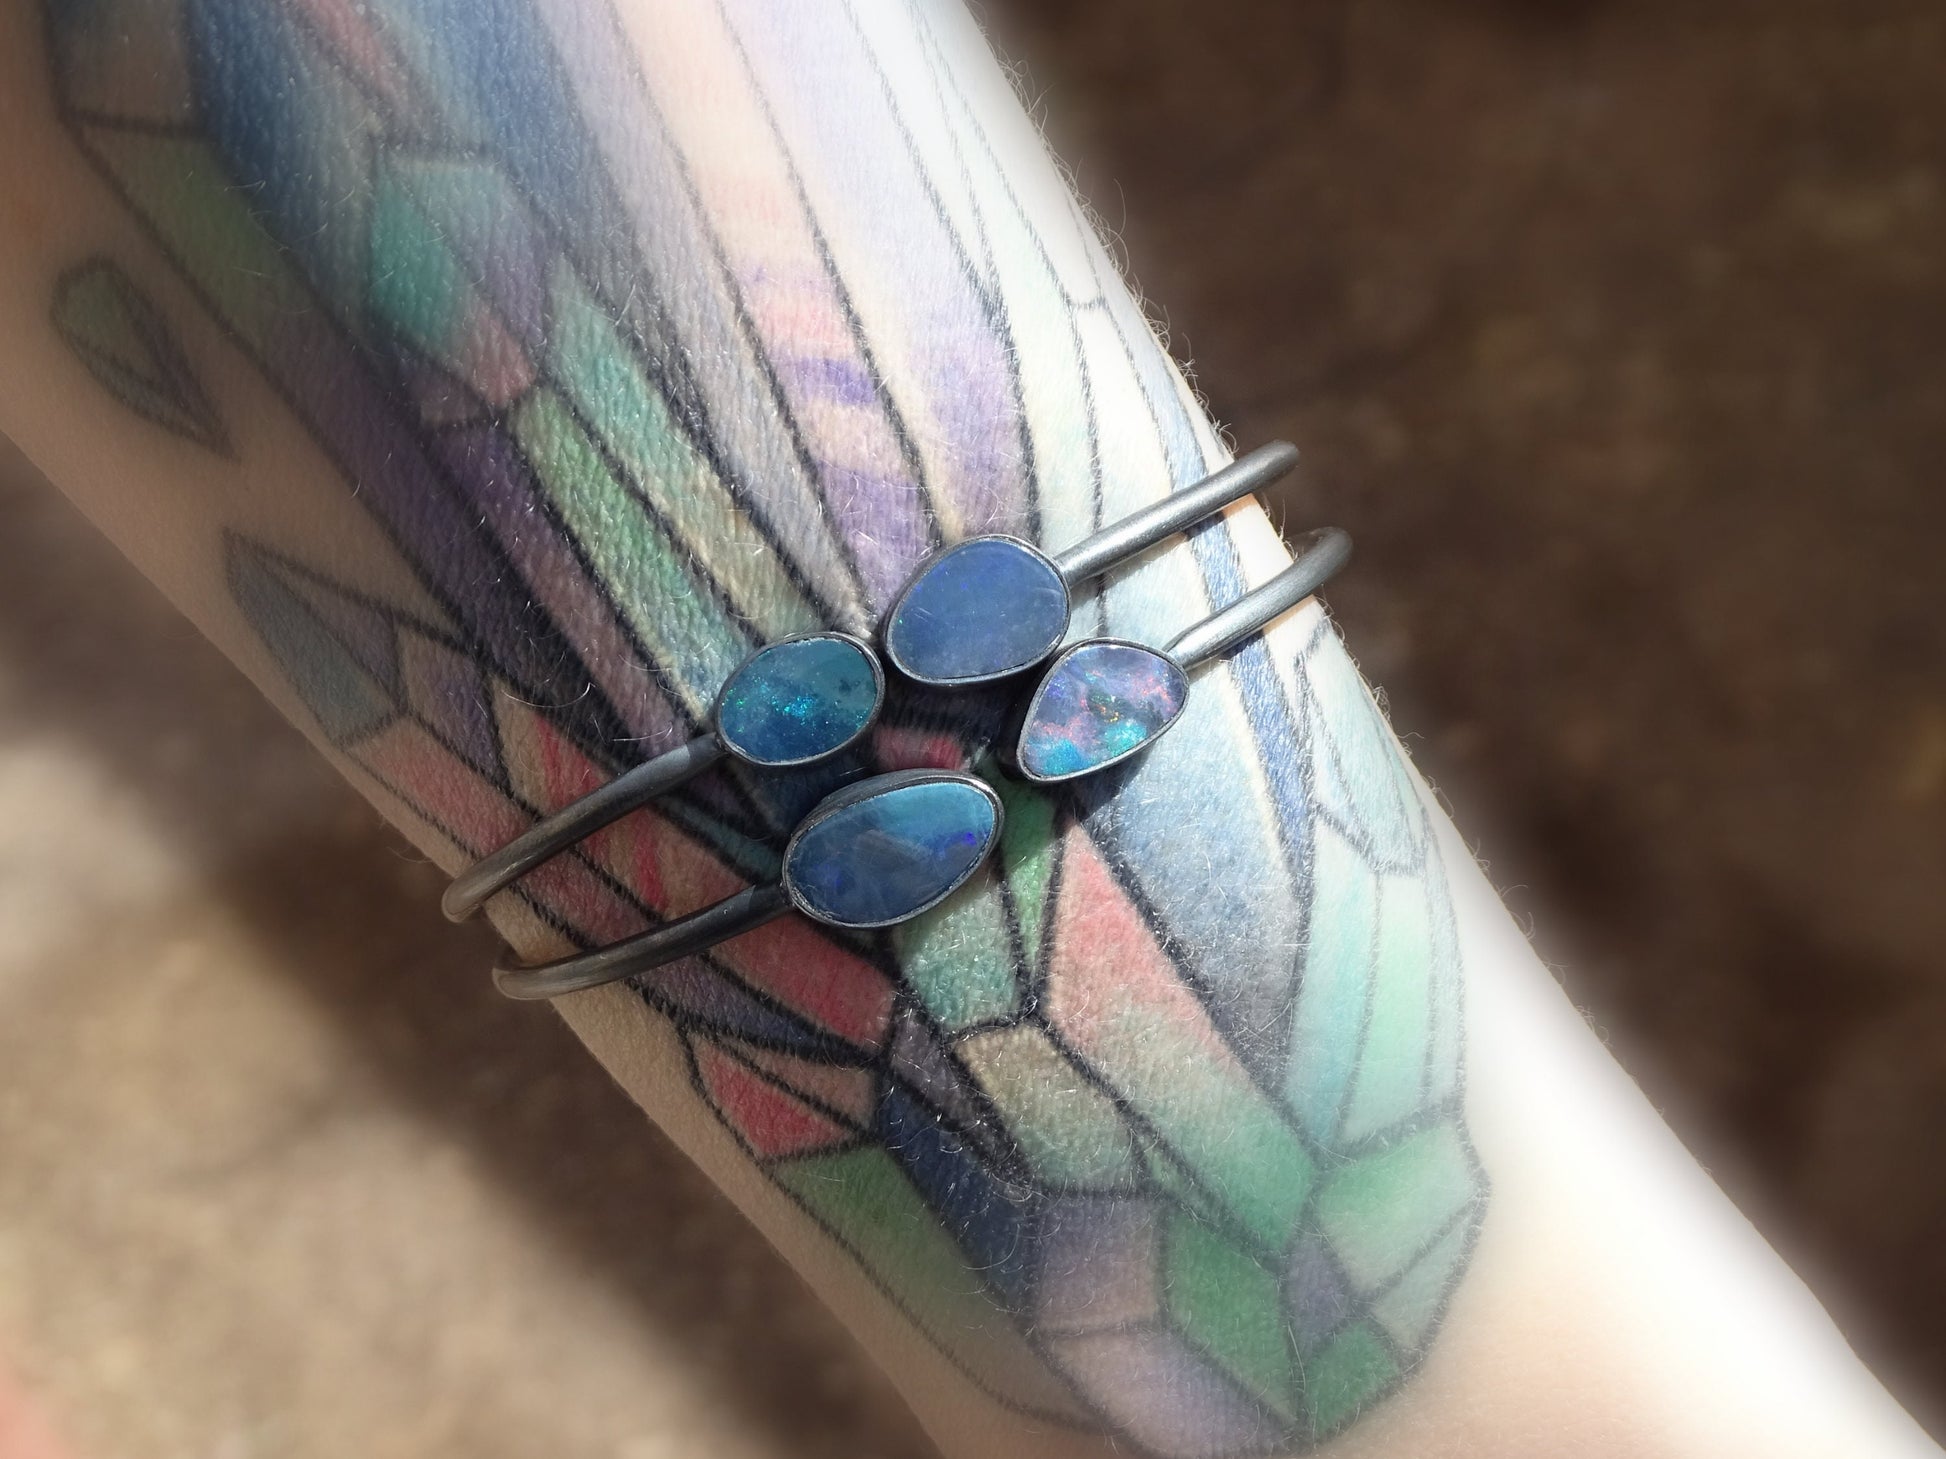 dainty opal bracelet black silver opal cuff bracelet, stacking bangle silver opal bangle, Australian opal jewelry, unique gift for wife - CrazyAss Jewelry Designs